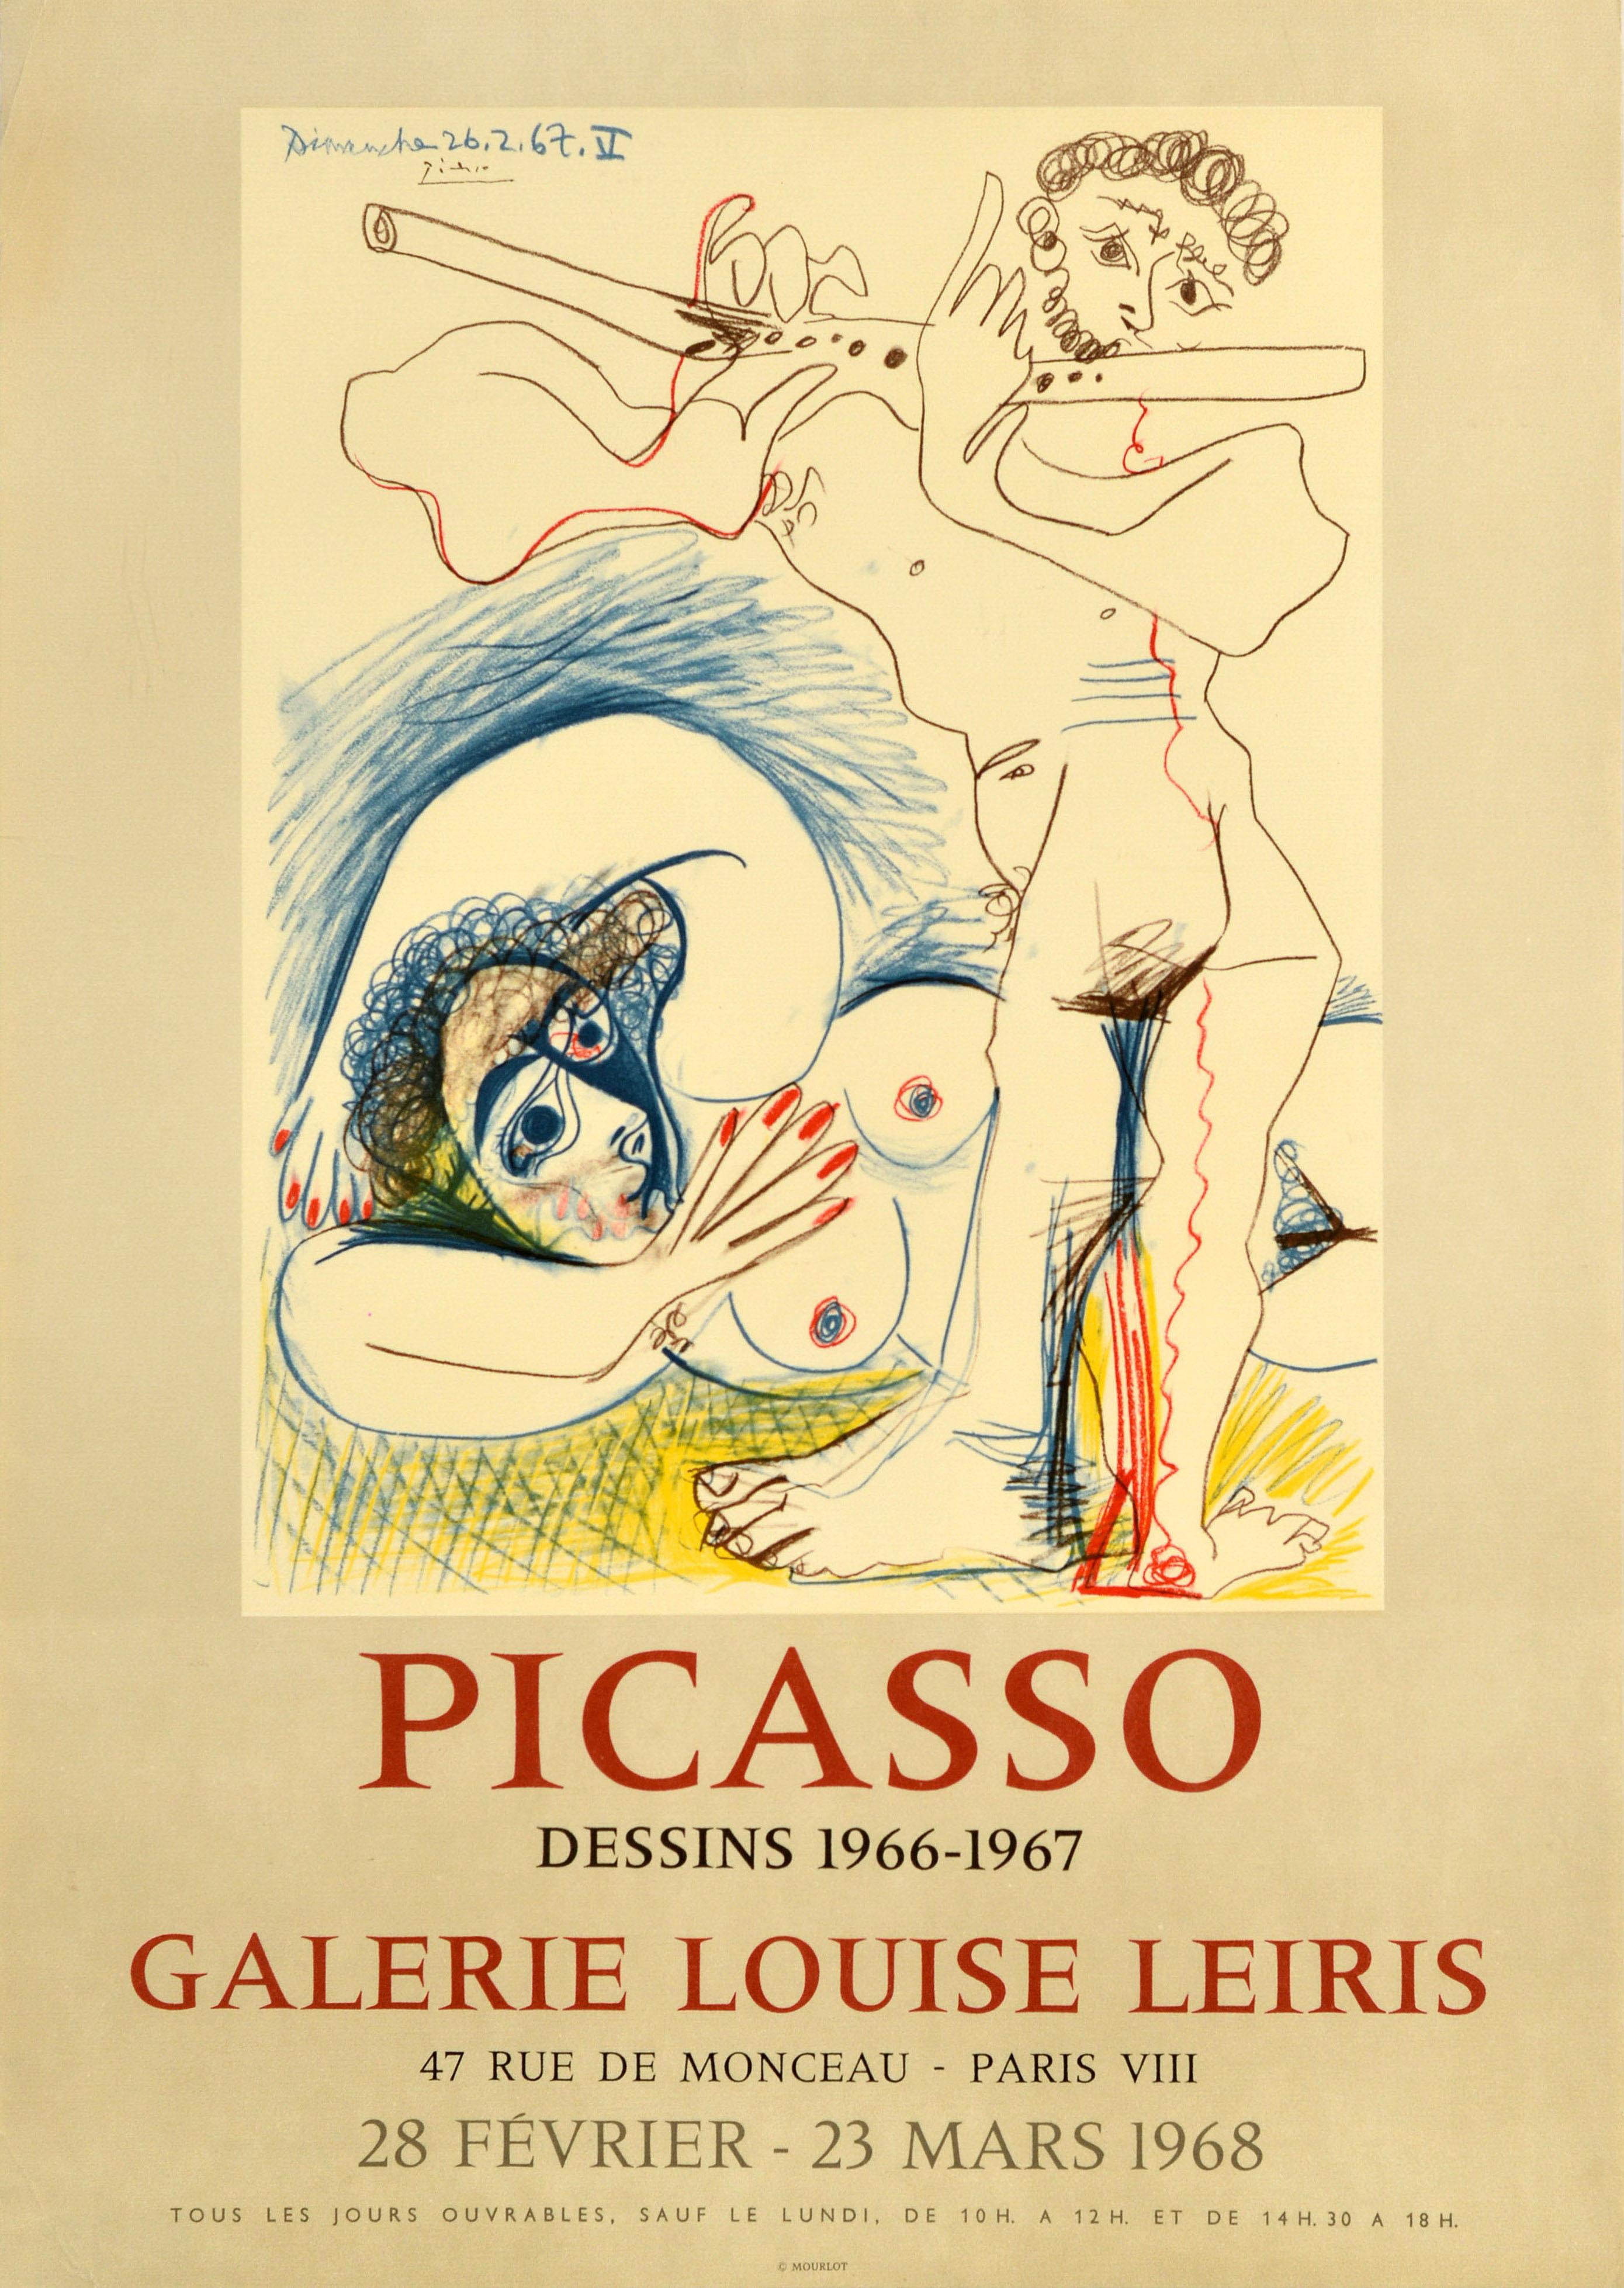 Pablo Picasso Print - Original Vintage Art Exhibition Poster Picasso Drawings Galerie Louise Leiris